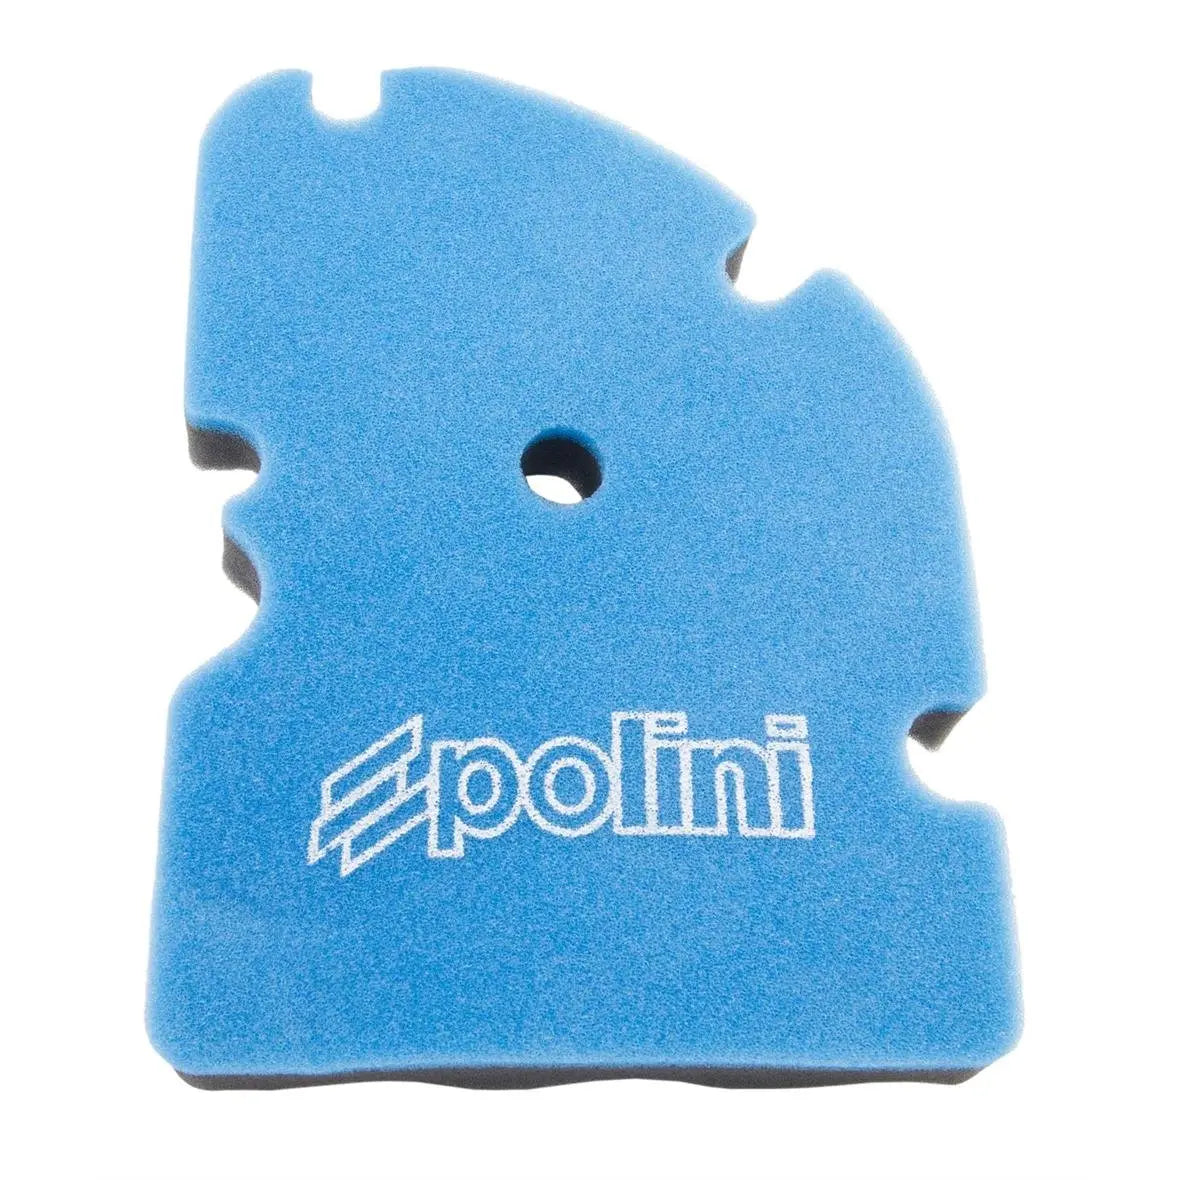 Air Filter Sponge POLINI | Vespa GTS Models 125-300cc Polini 9.95 Falan Parts